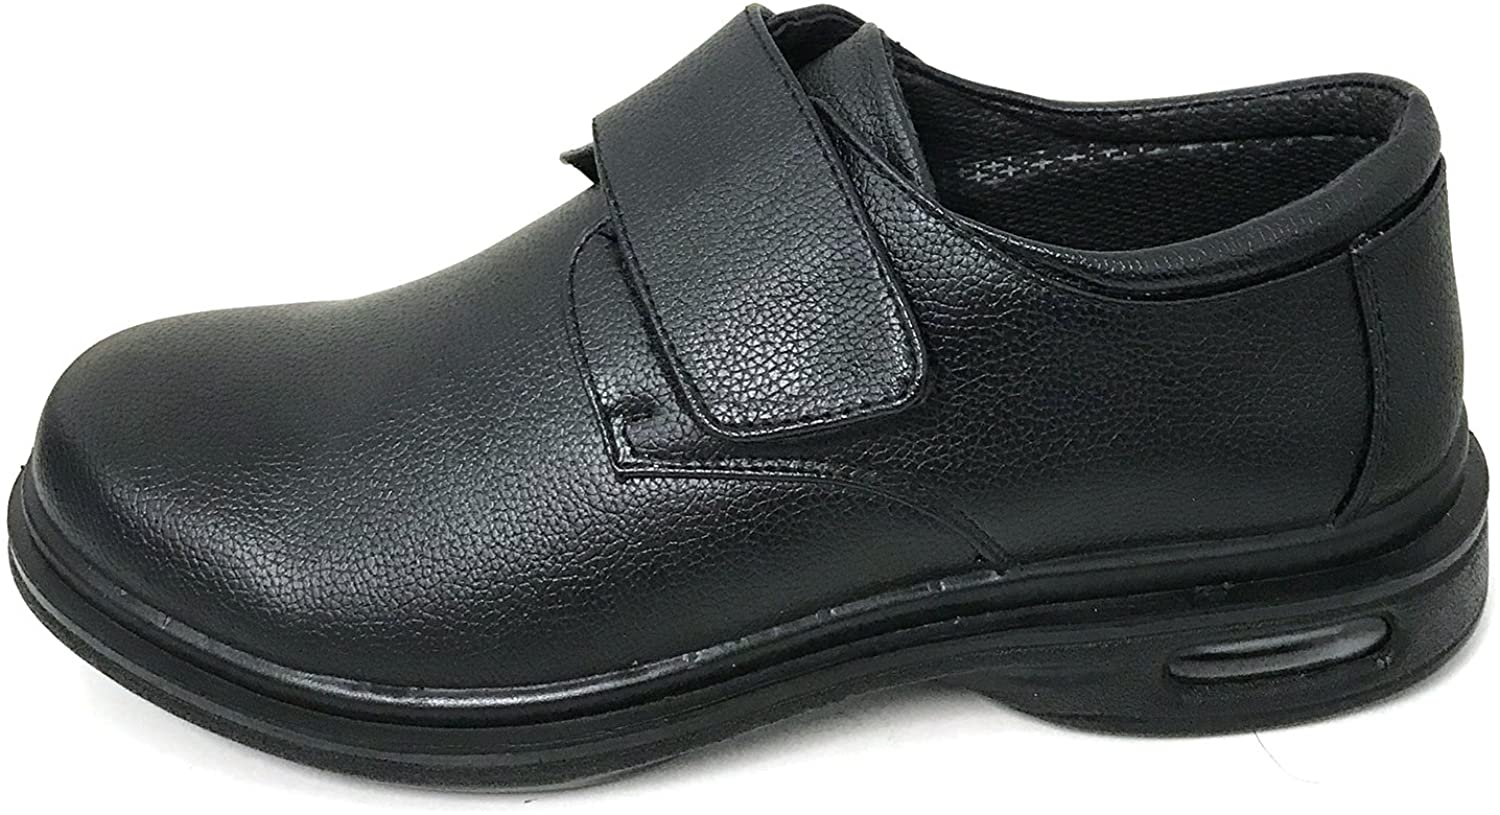 Men's Comfort Shoes Hook and Loop Air Cushion Slip Resistant Walking Restaurant Work Shoes - image 2 of 3